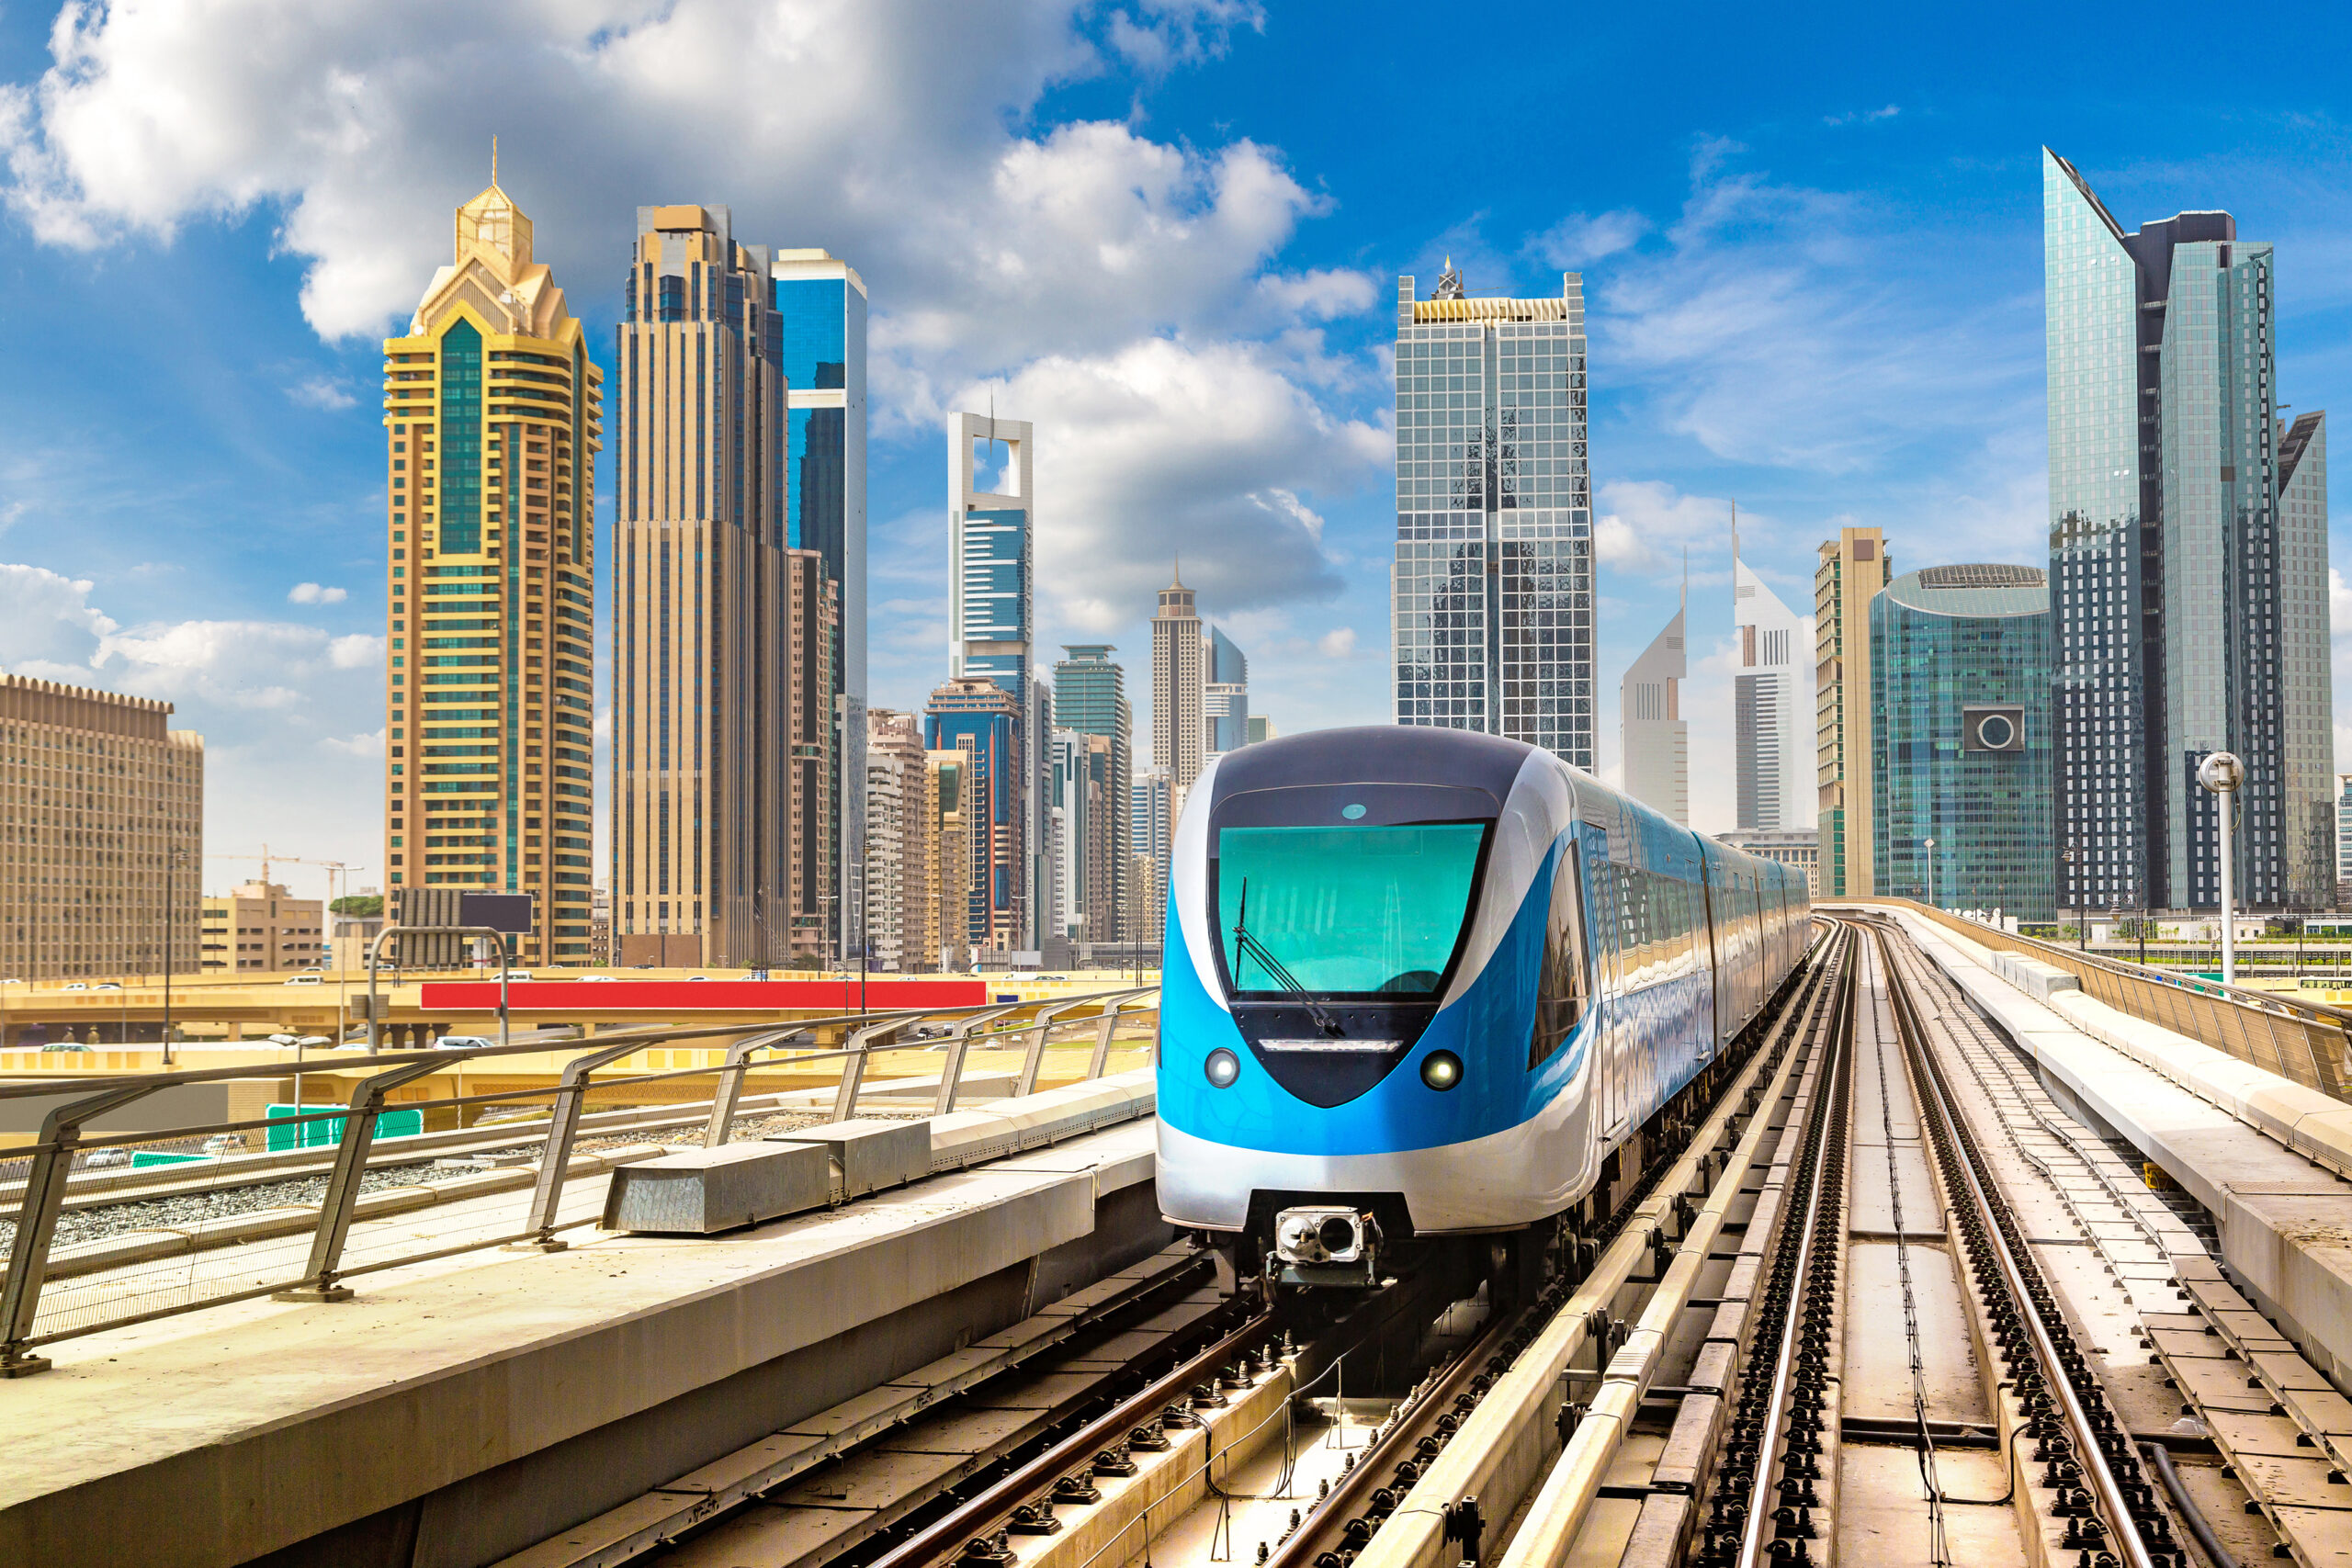 Dubai Metro - Metro train approaching the station